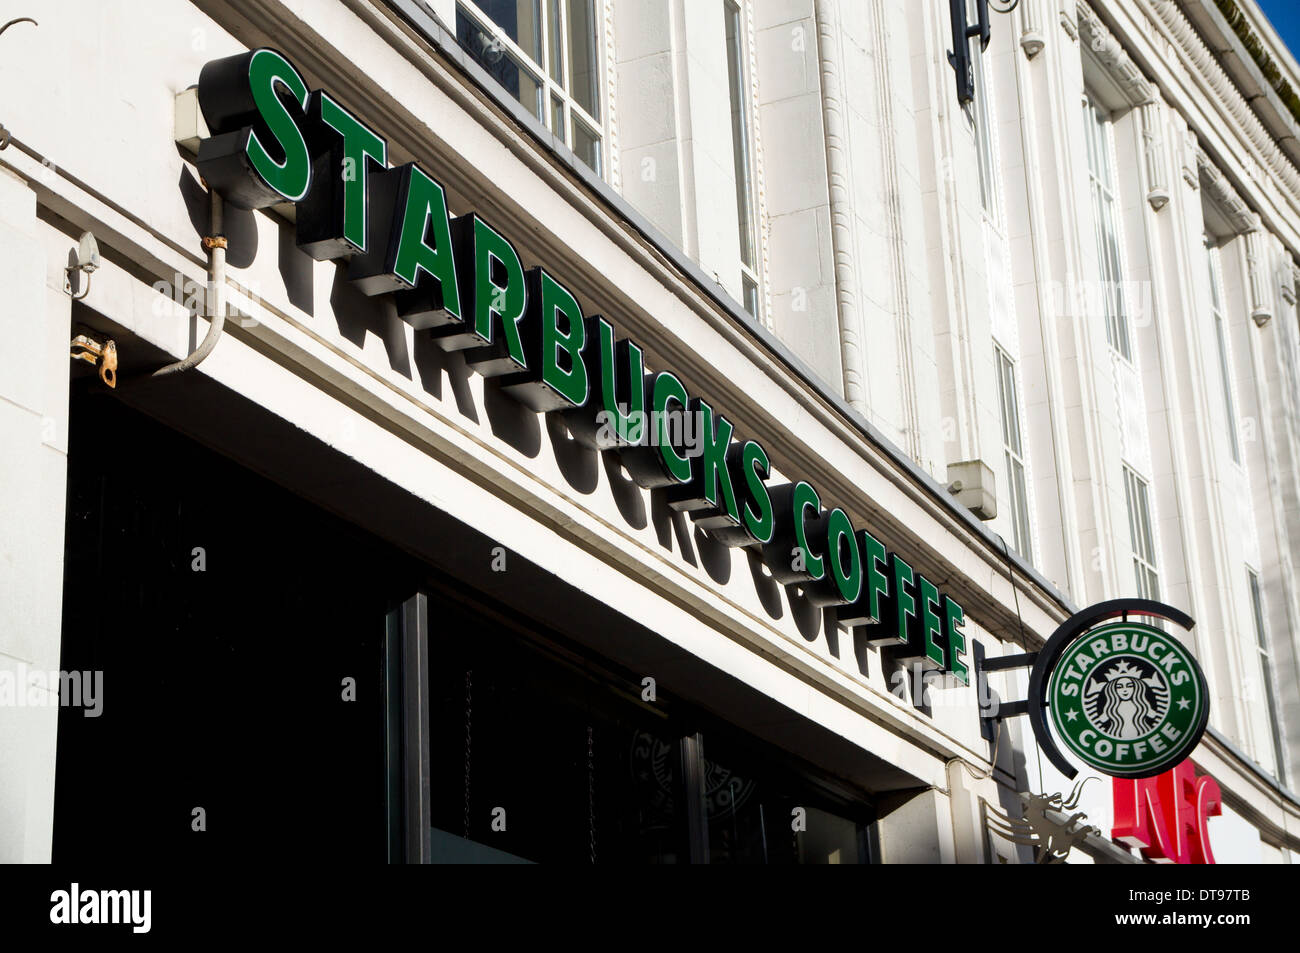 Starbucks Coffee shop, Cardiff city centre, Wales. Stock Photo